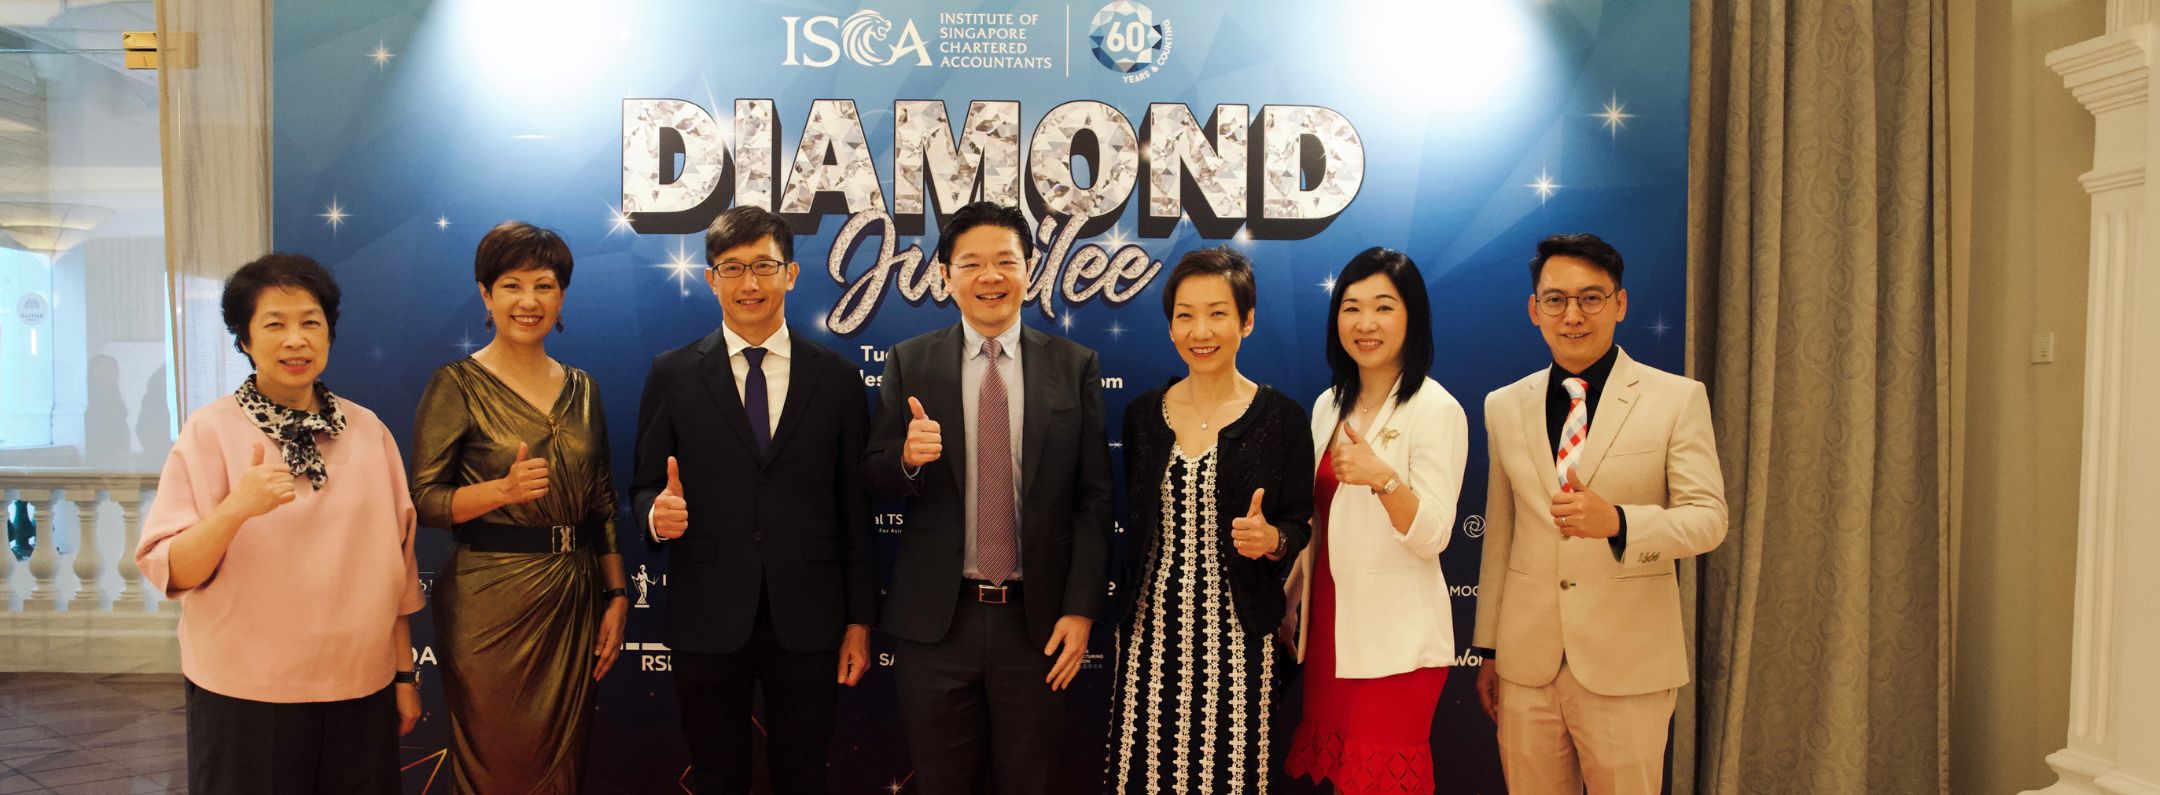 DPM Wong at the ISCA 60th Anniversary Dinner_Hero jpg